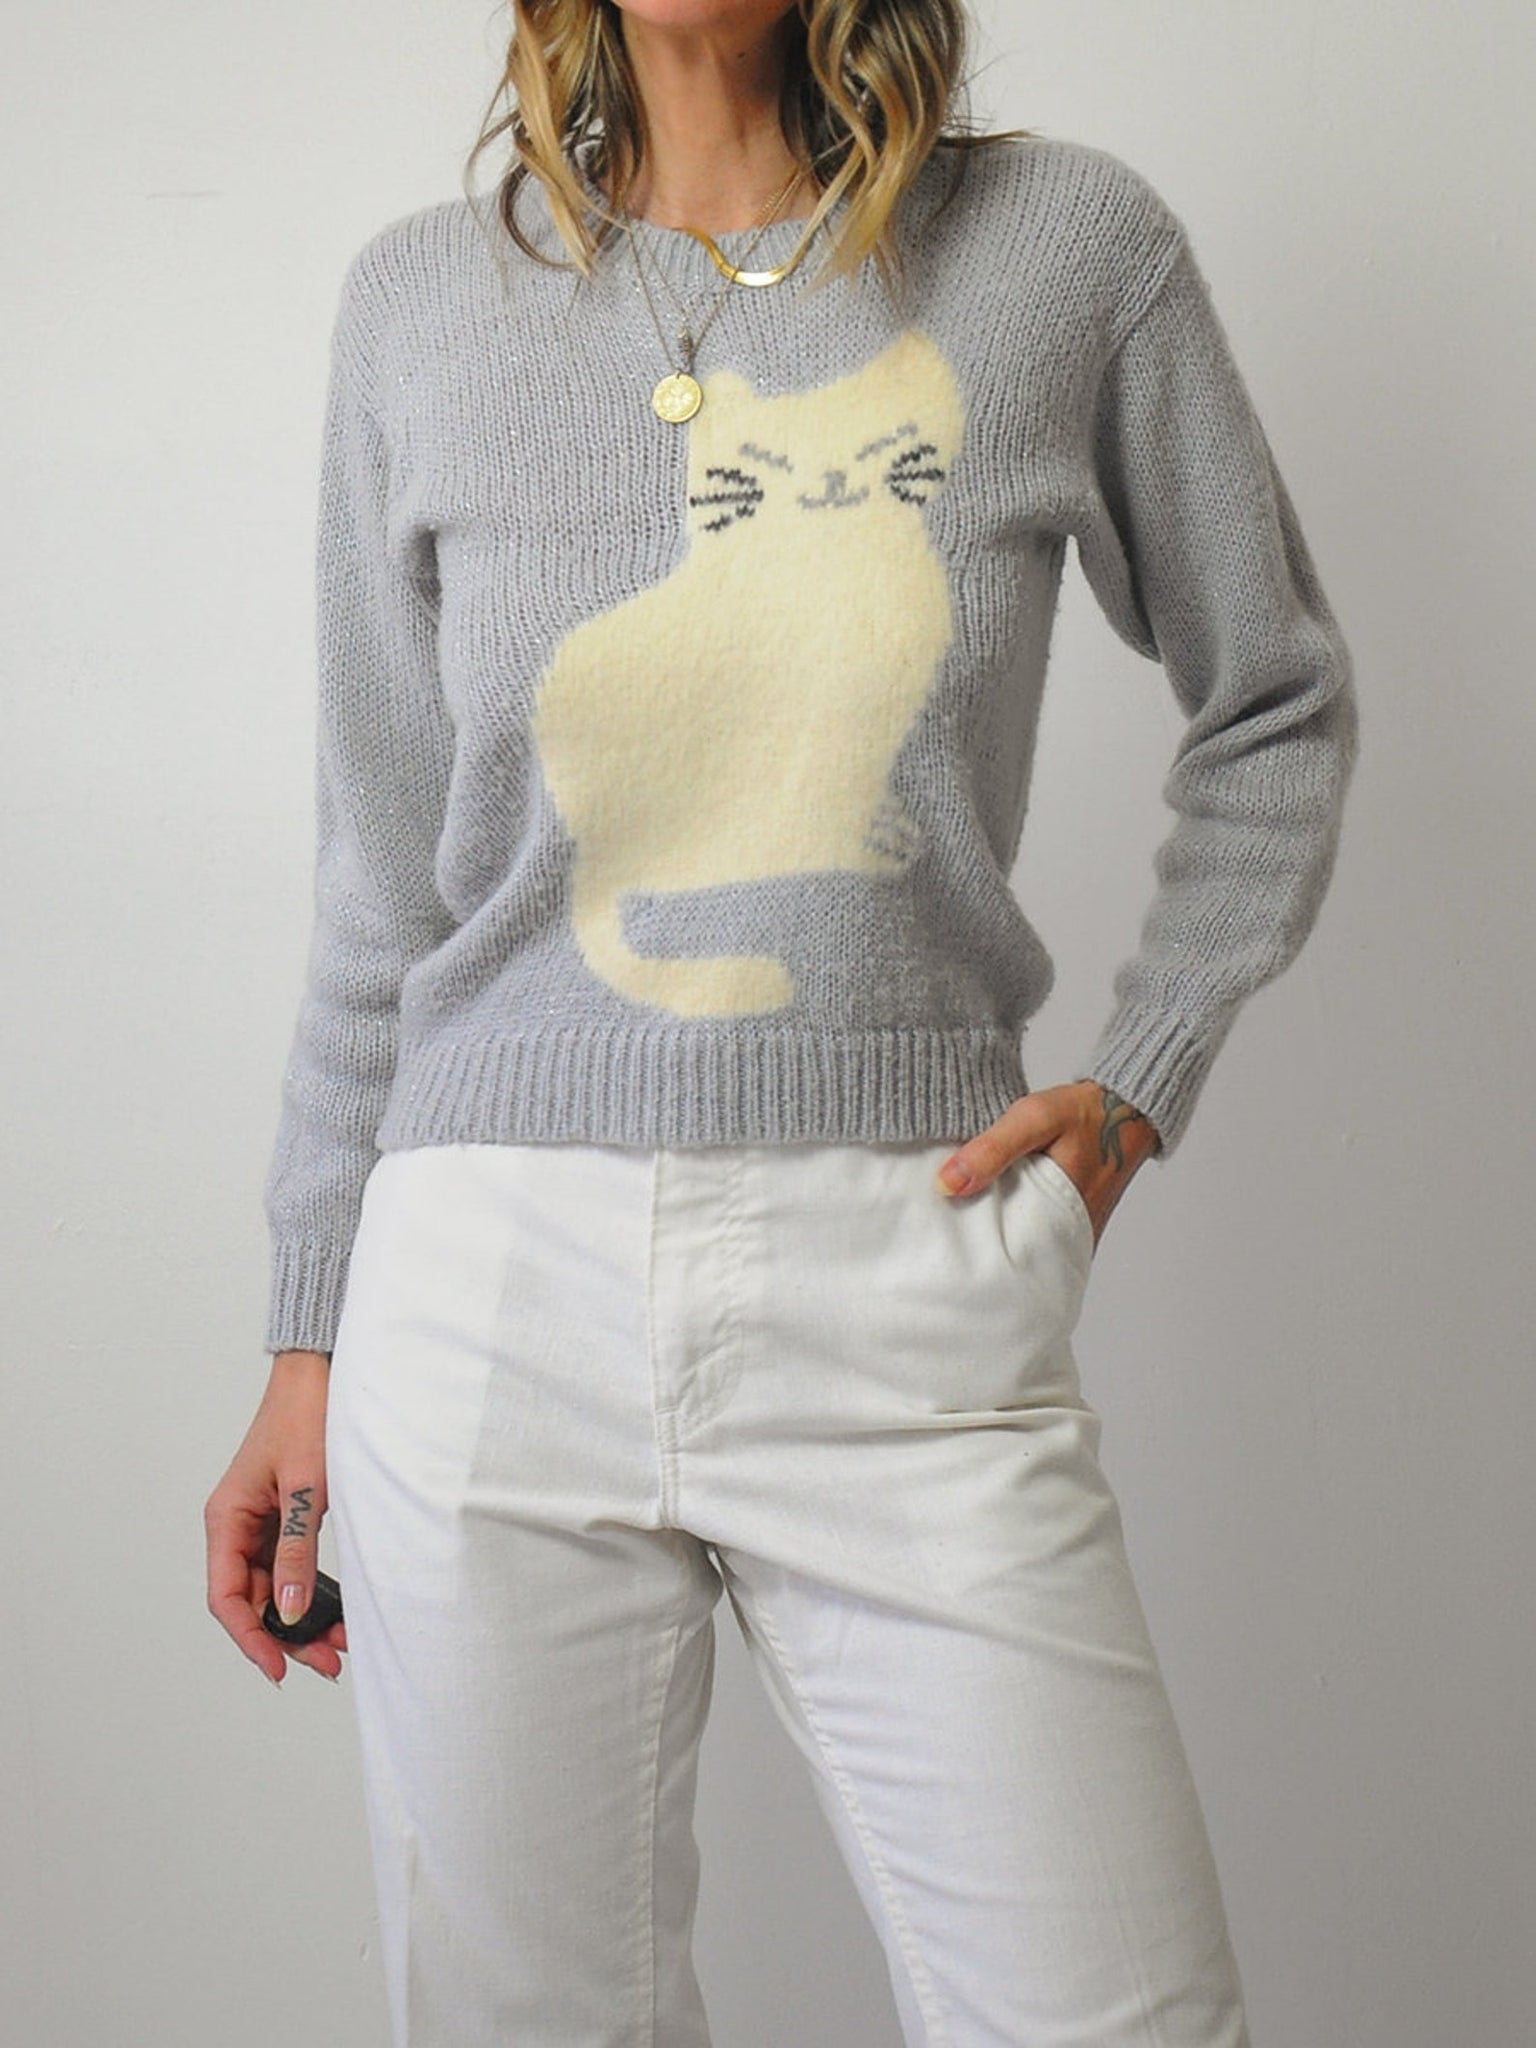 Smiling Cat Angora sweater